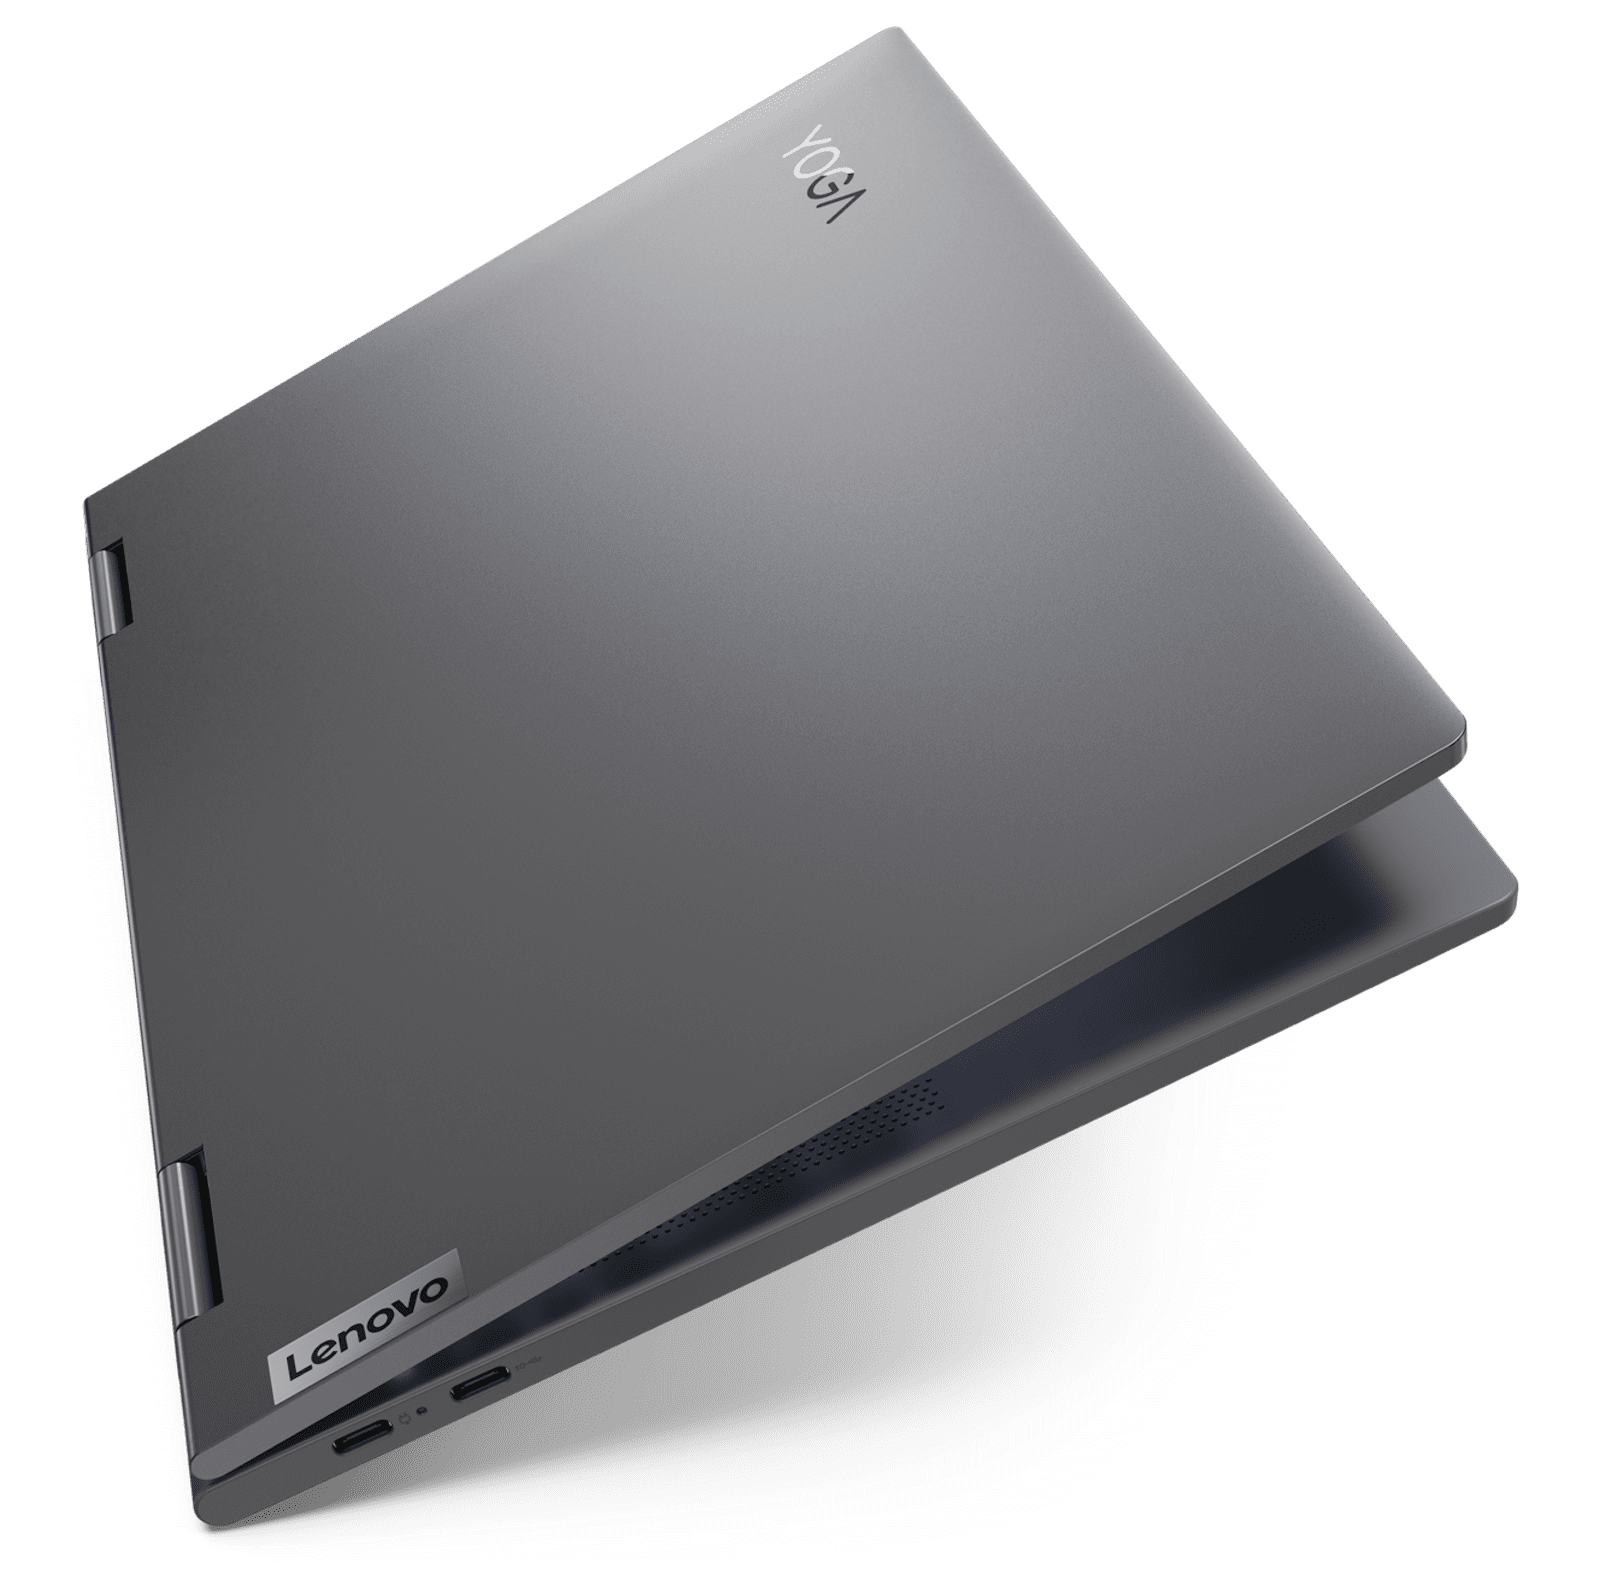 Lenovo Yoga 5G - 14 inch 5G enabled laptop with Qualcomm 5G chipset